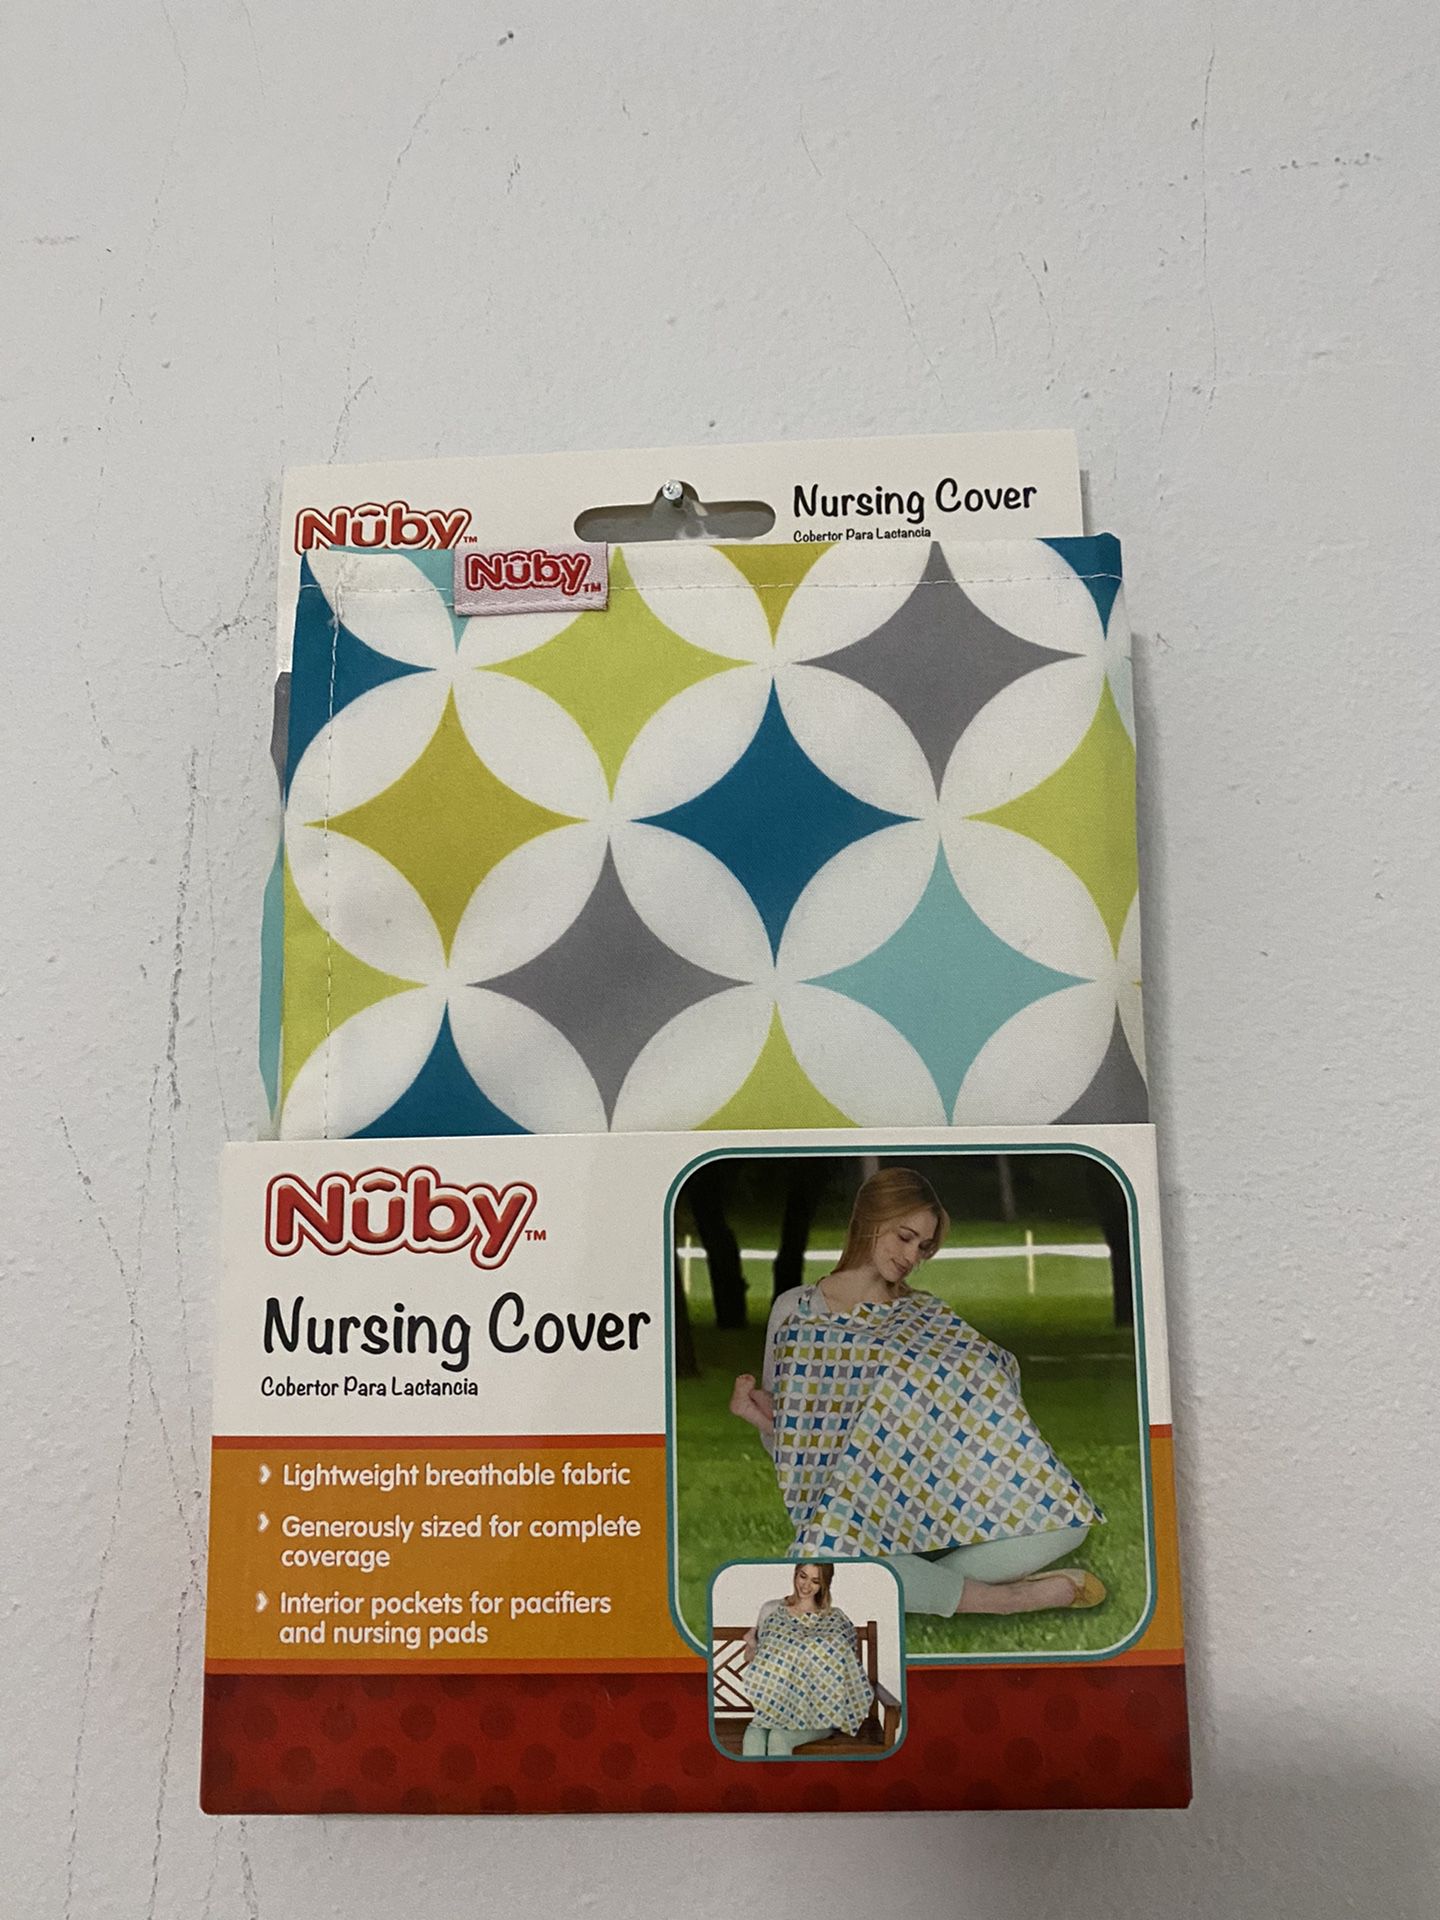 Nuby nursing cover